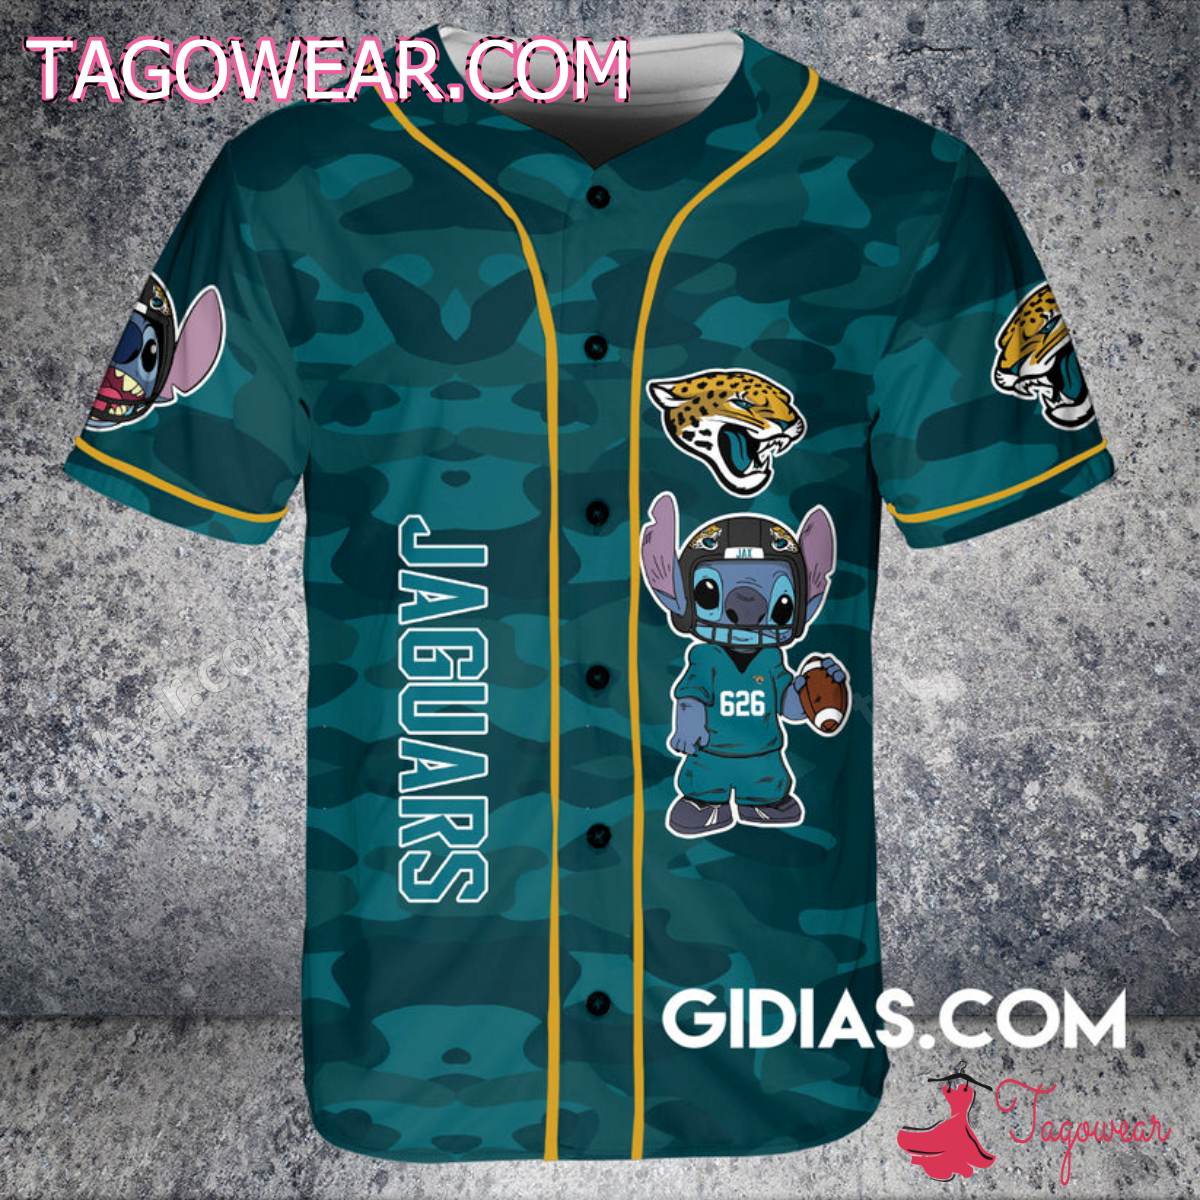 Jacksonville Jaguars Stitch Camouflage Personalized Baseball Jersey a